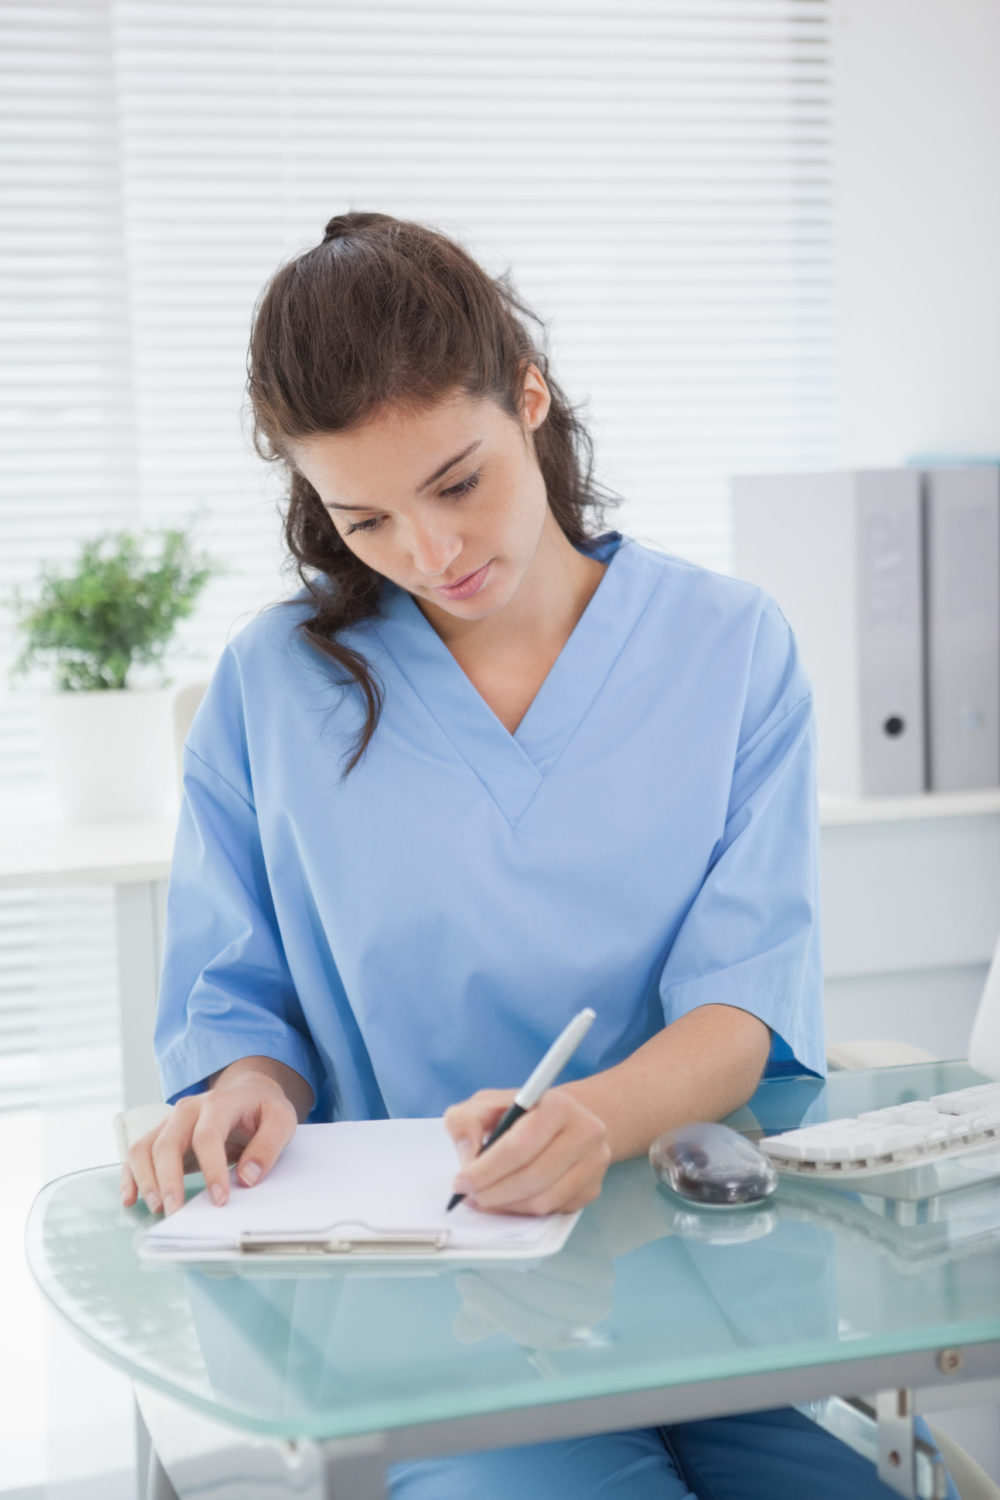 Start a career in medical billing today!